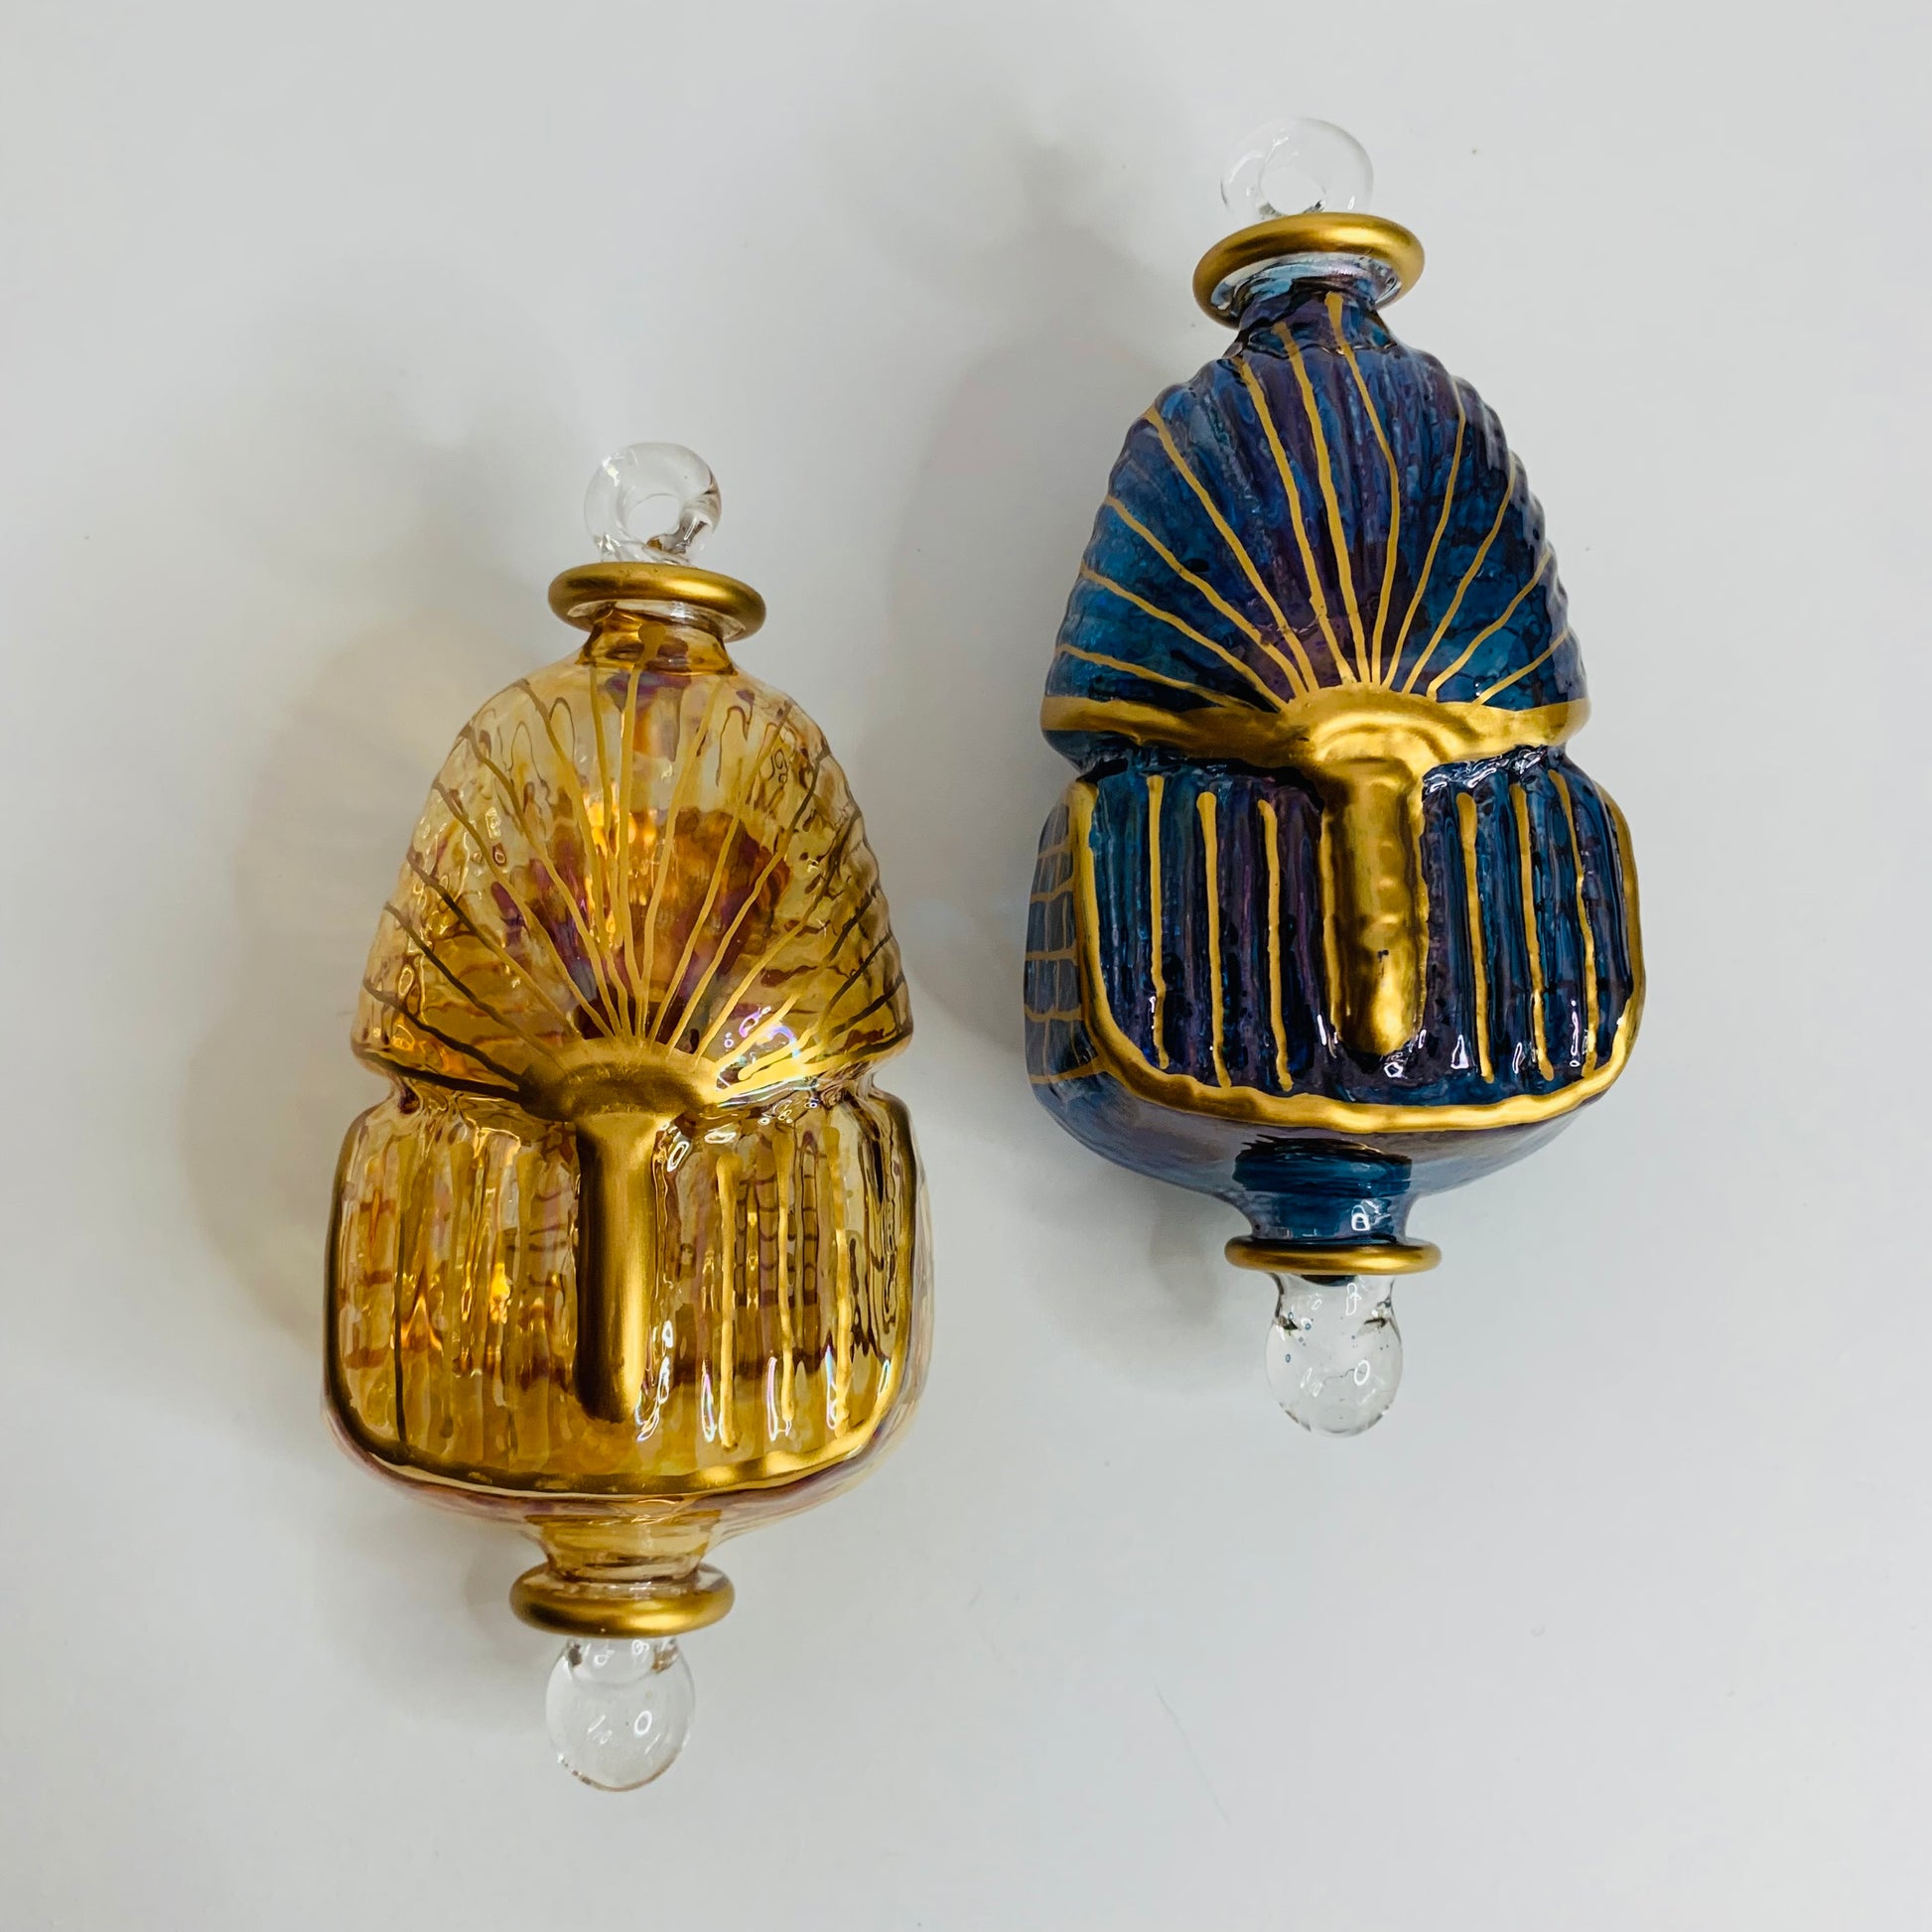 Blown Glass Ornament - Mask of King Tut Gold